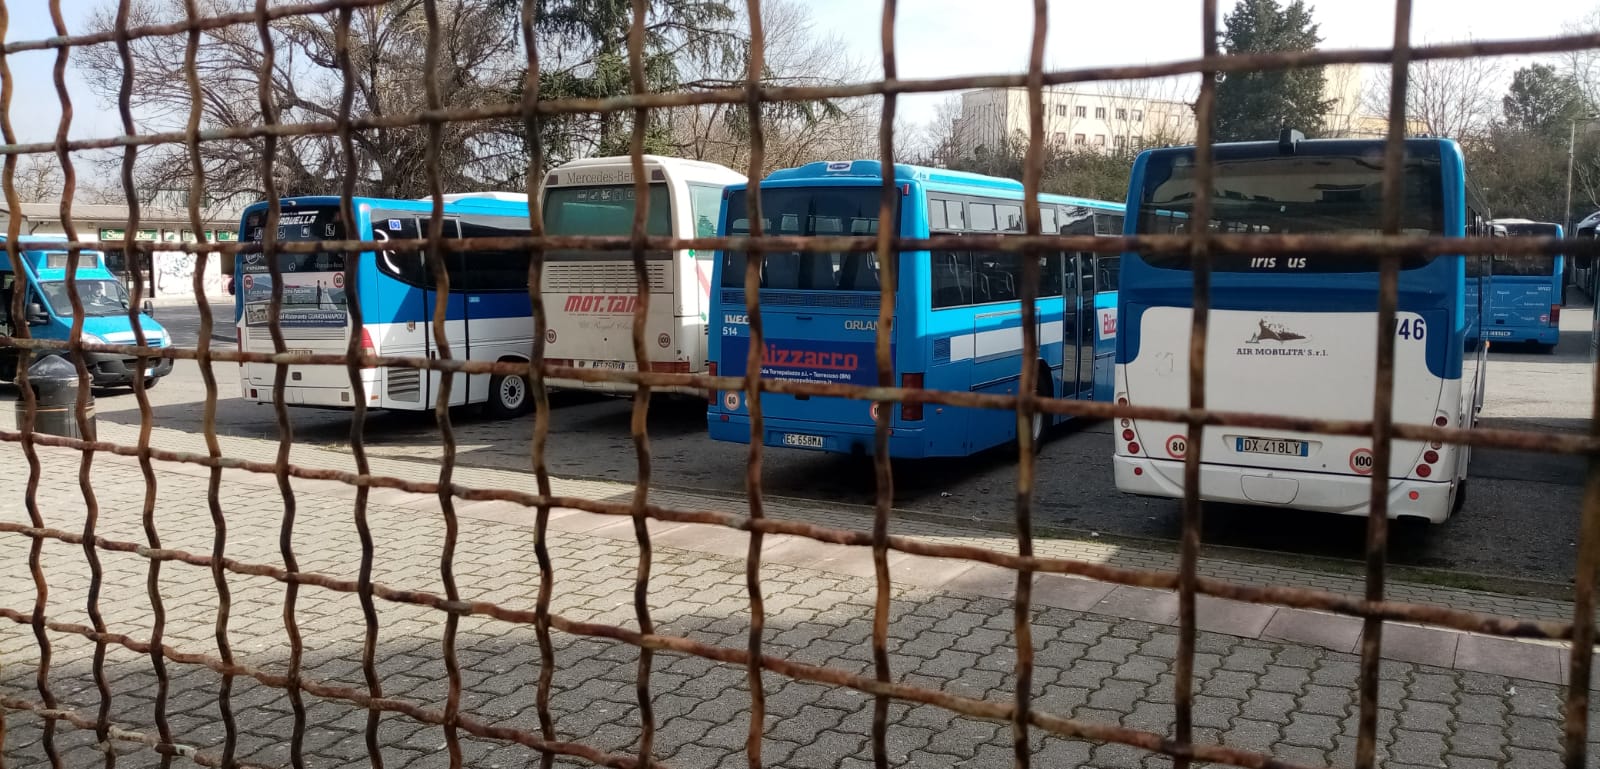 Benevento| Violenze contro autista, denunciato aggressore. Resta nodo Terminal Bus